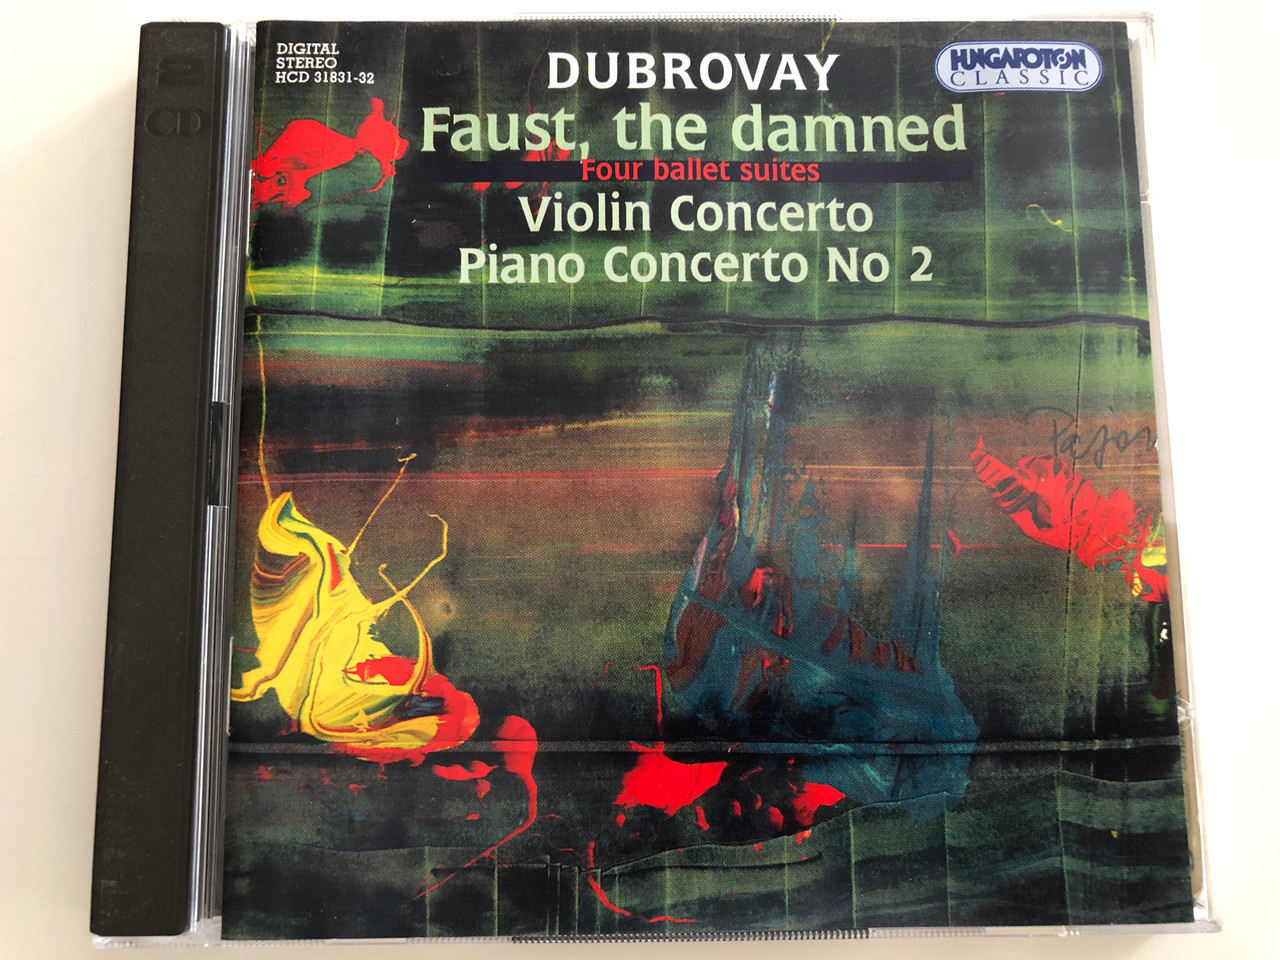 László Dubrovay - Faust, the damned / Four ballet suites / Violin Concerto,  Piano Concerto No. 2 / 2CD / Hungaroton Classic Audio CD 1995 / HCD  31831-32 - bibleinmylanguage